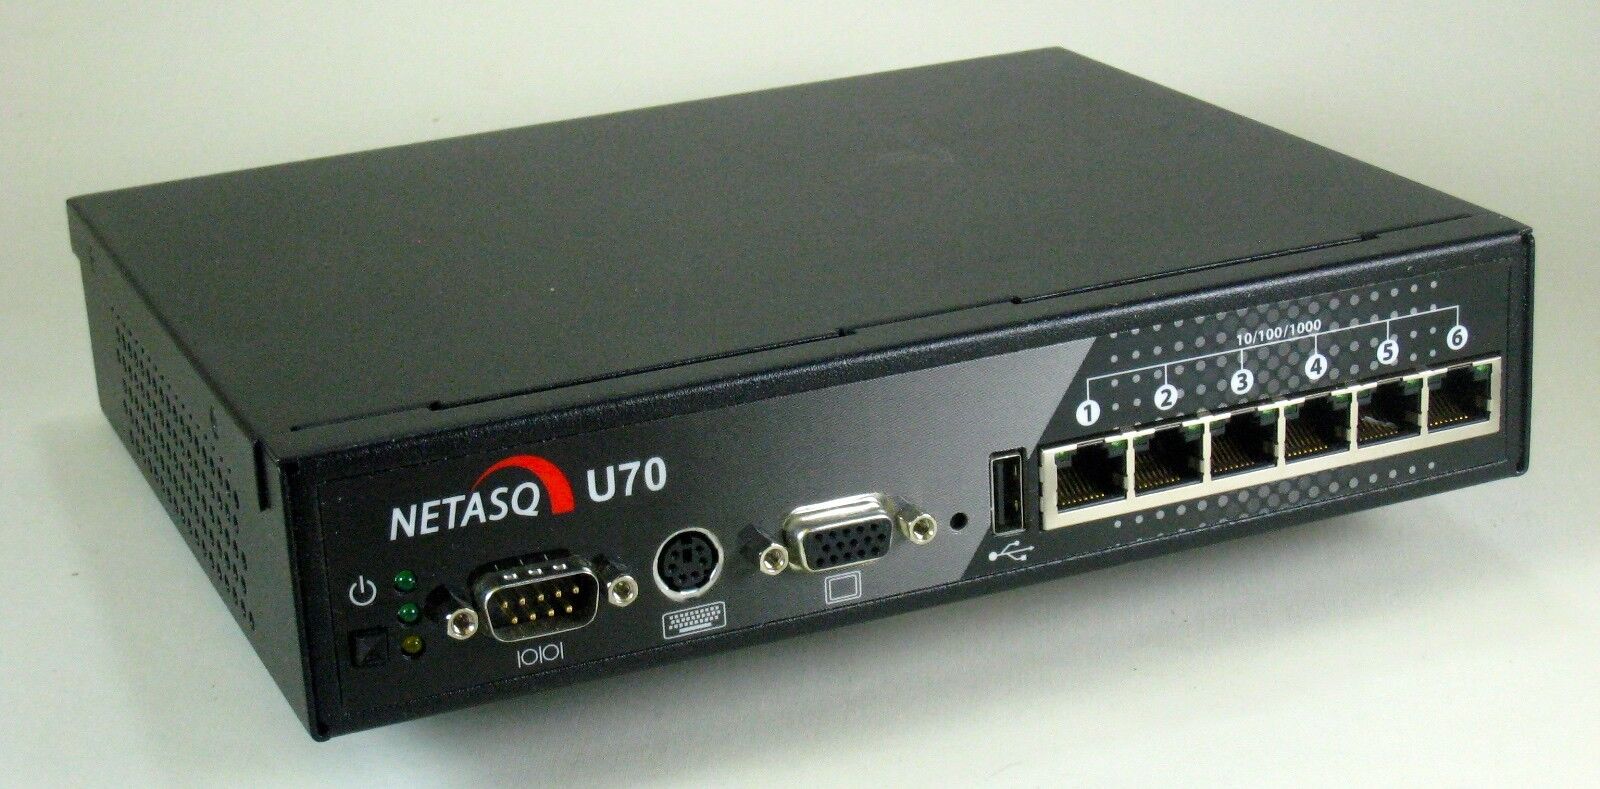 NETASQ U70-A Multifunction Firewall